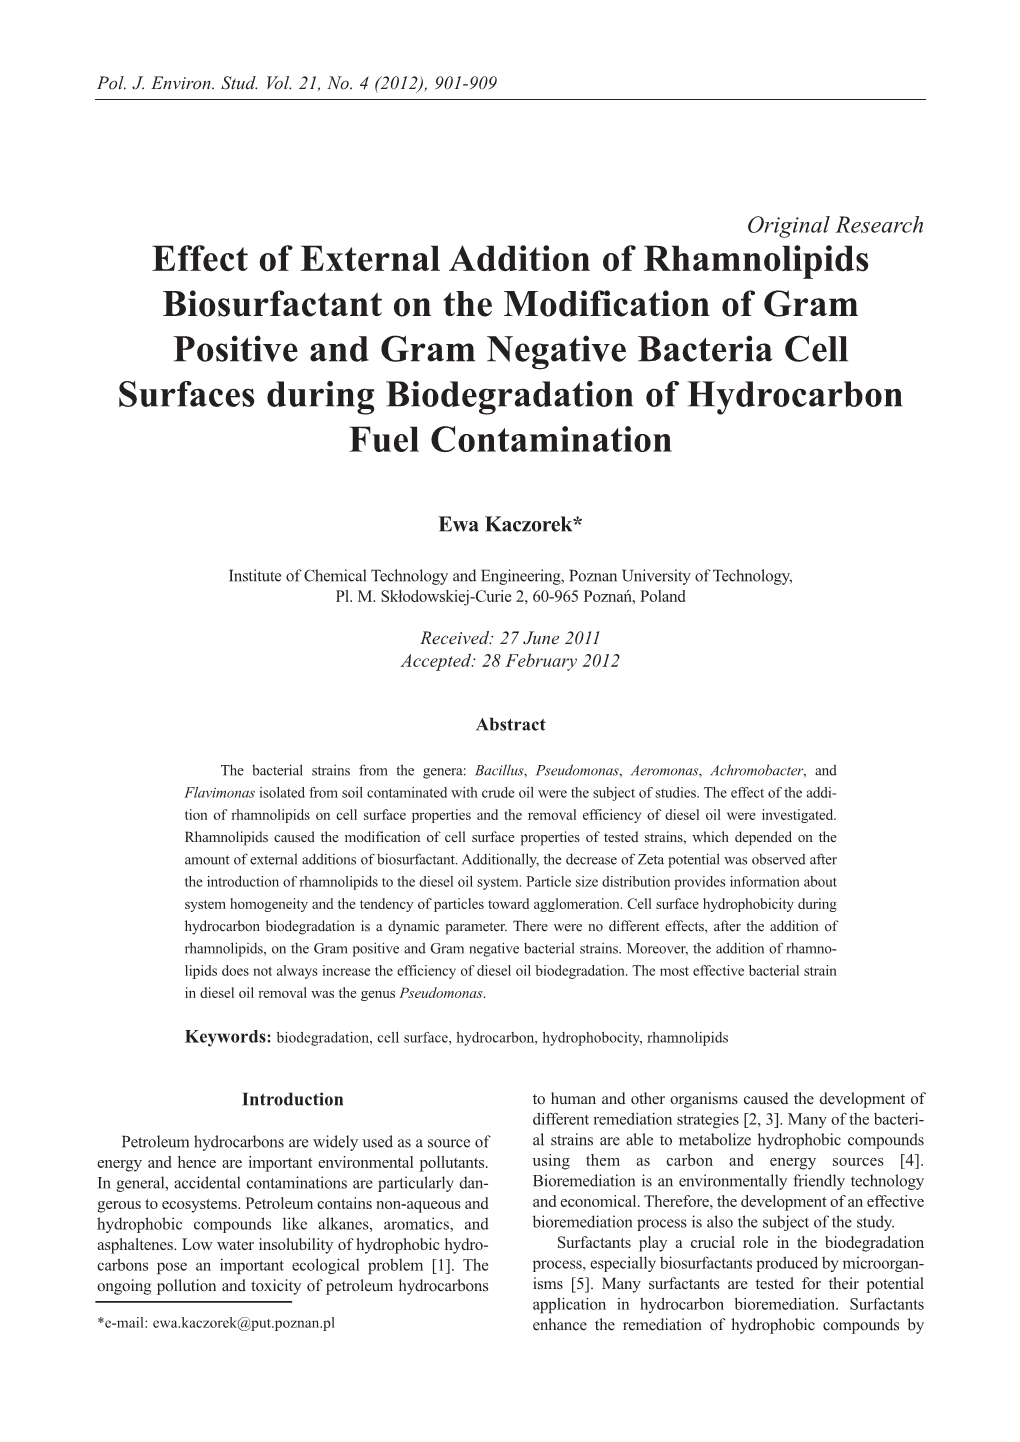 Effect of External Addition of Rhamnolipids Biosurfactant on The